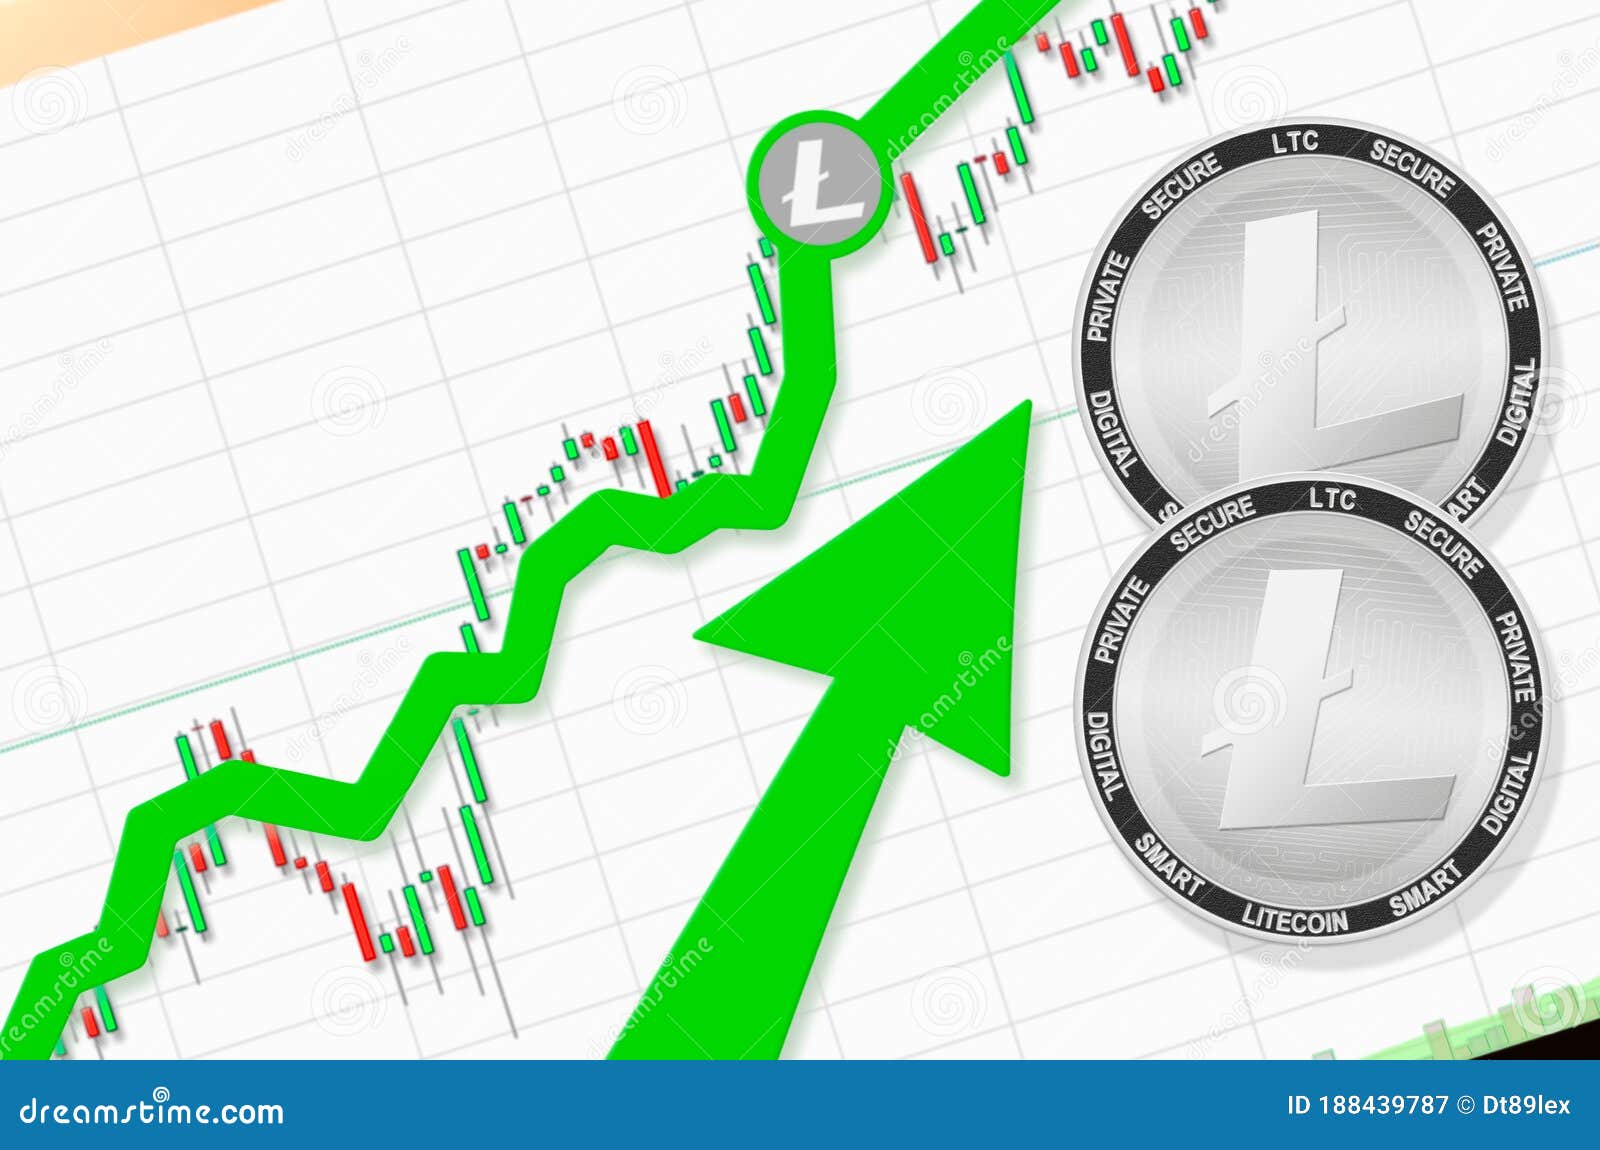 Litecoin bitcoin price chart Bitcoin pric3